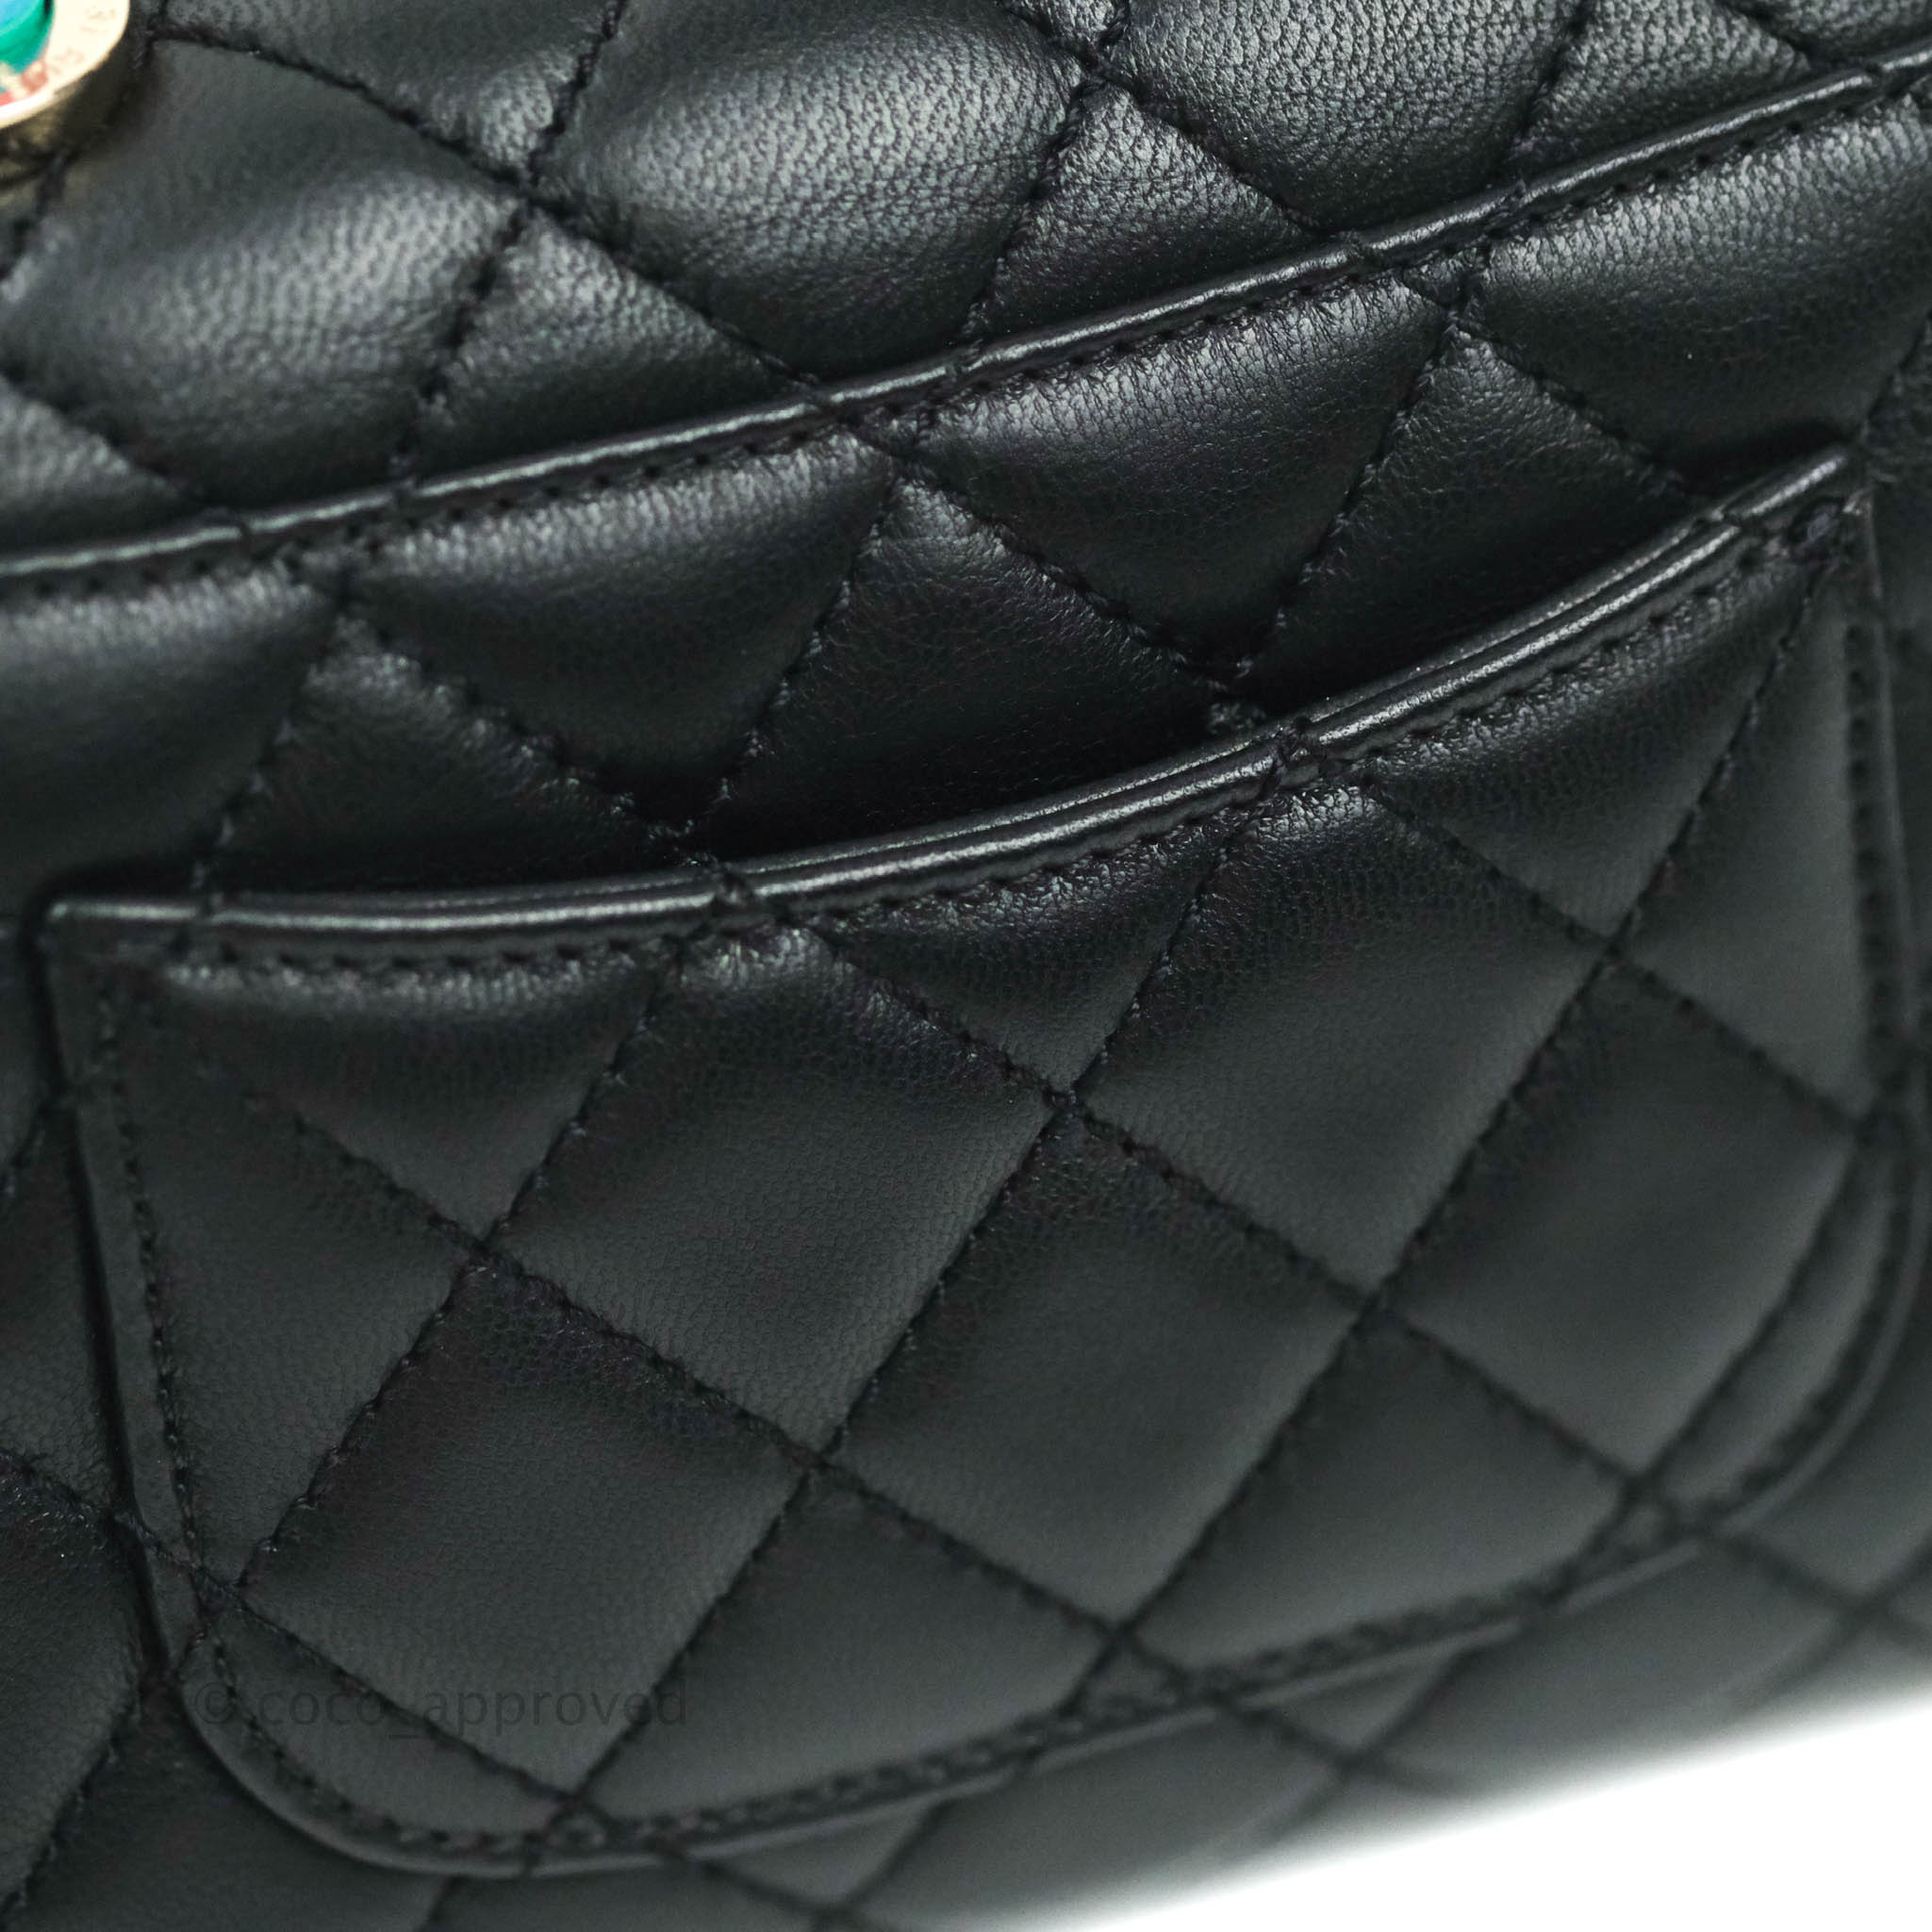 Chanel White Quilted Lambskin Rainbow Coco Handle Bag Mini Q6B4791IW9001